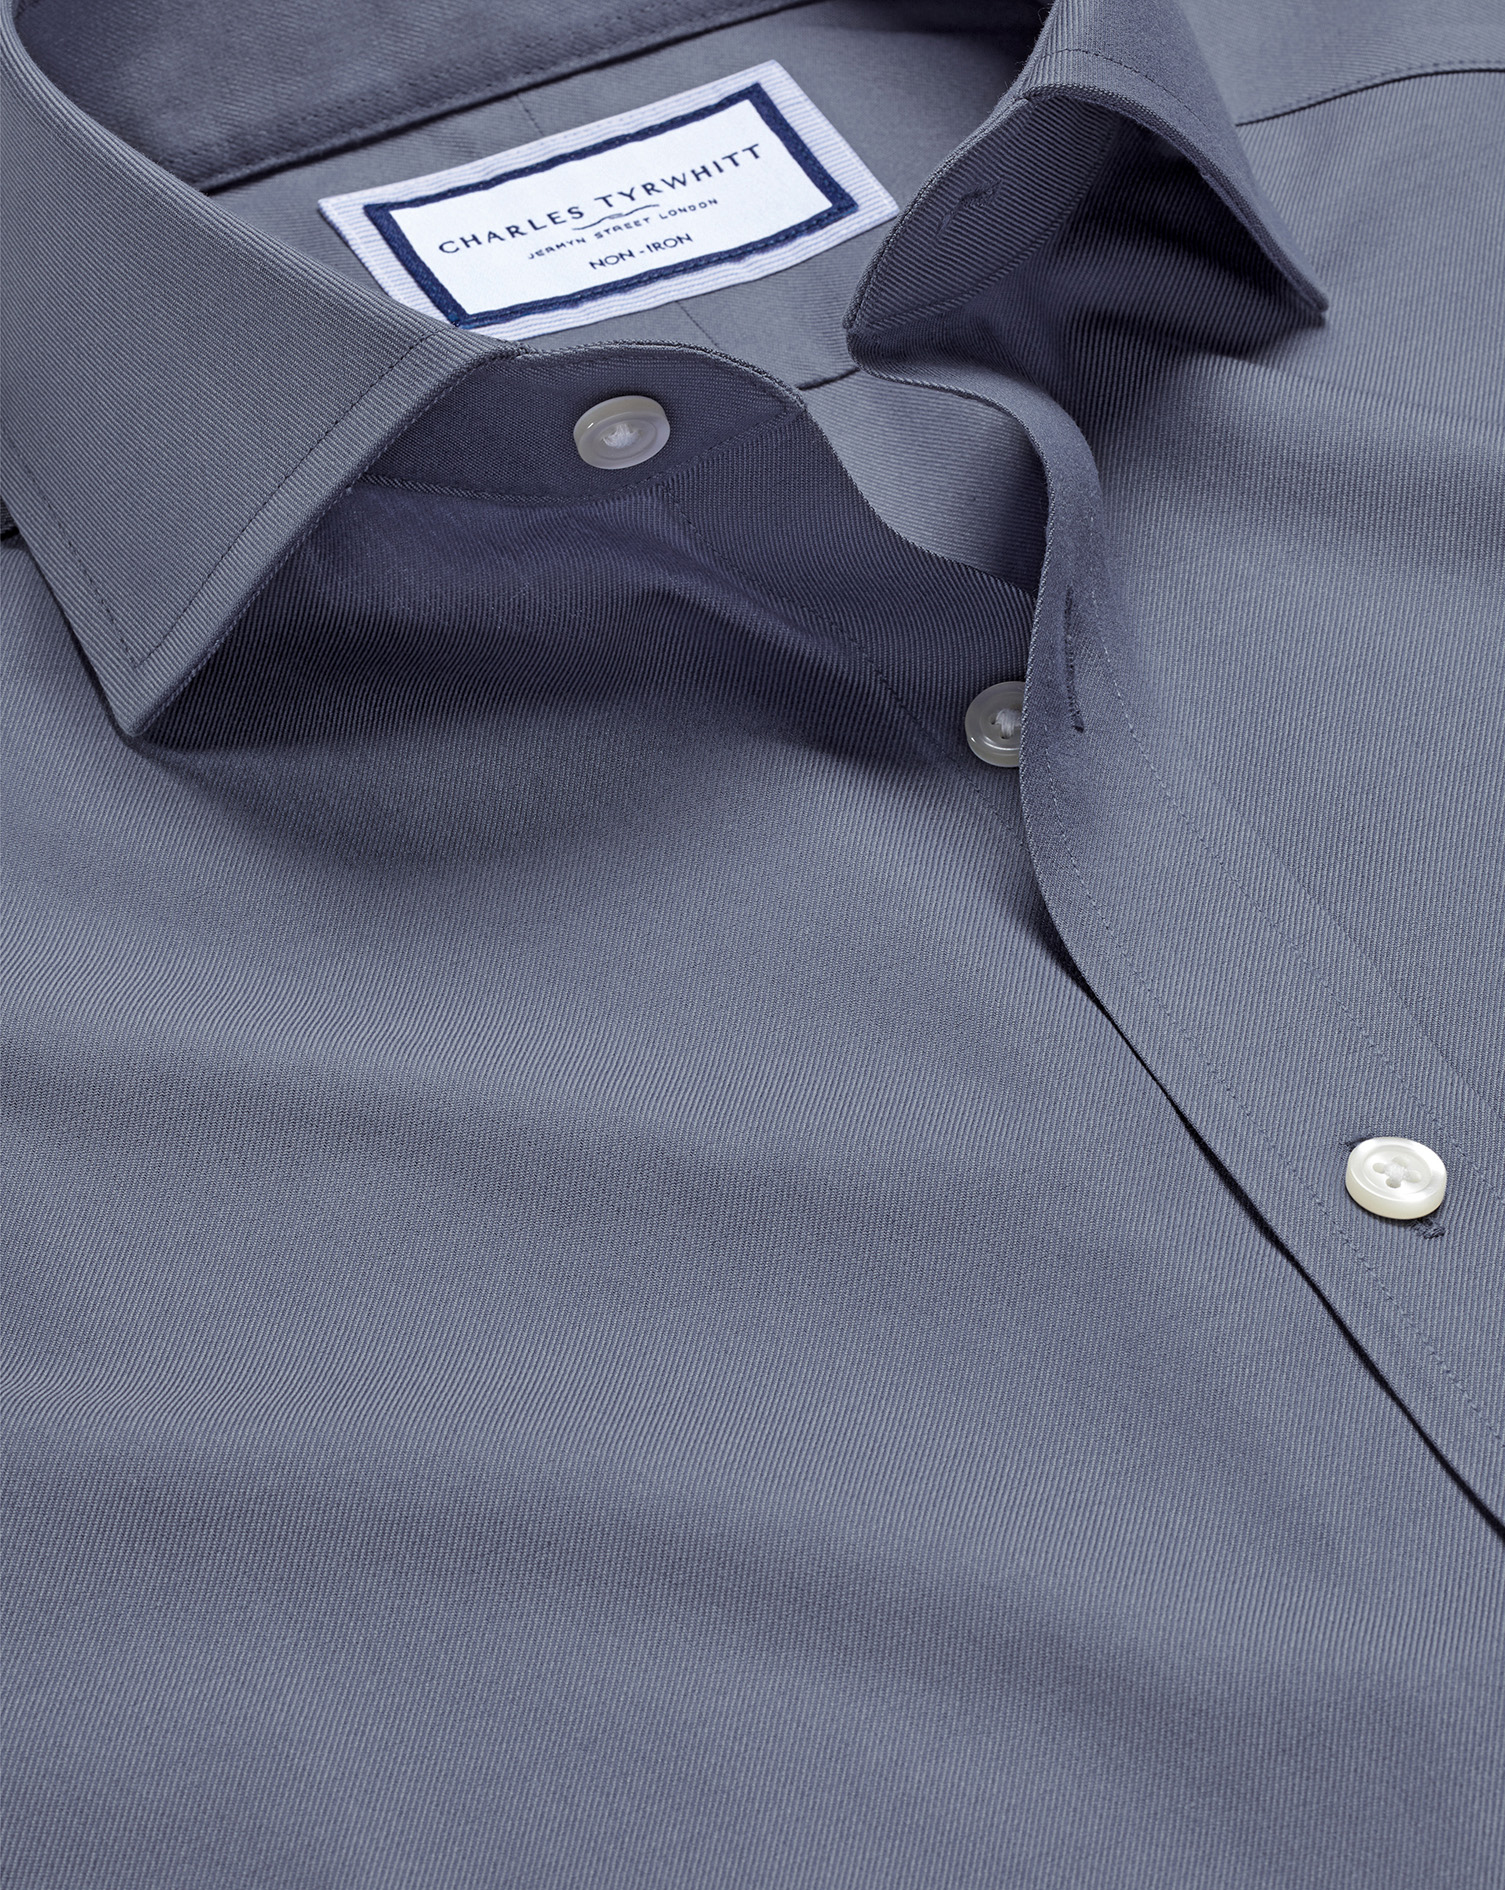 Men's Charles Tyrwhitt Cutaway Collar Non-Iron Twill Dress Shirt - Heather Blue Single Cuff Size 16.